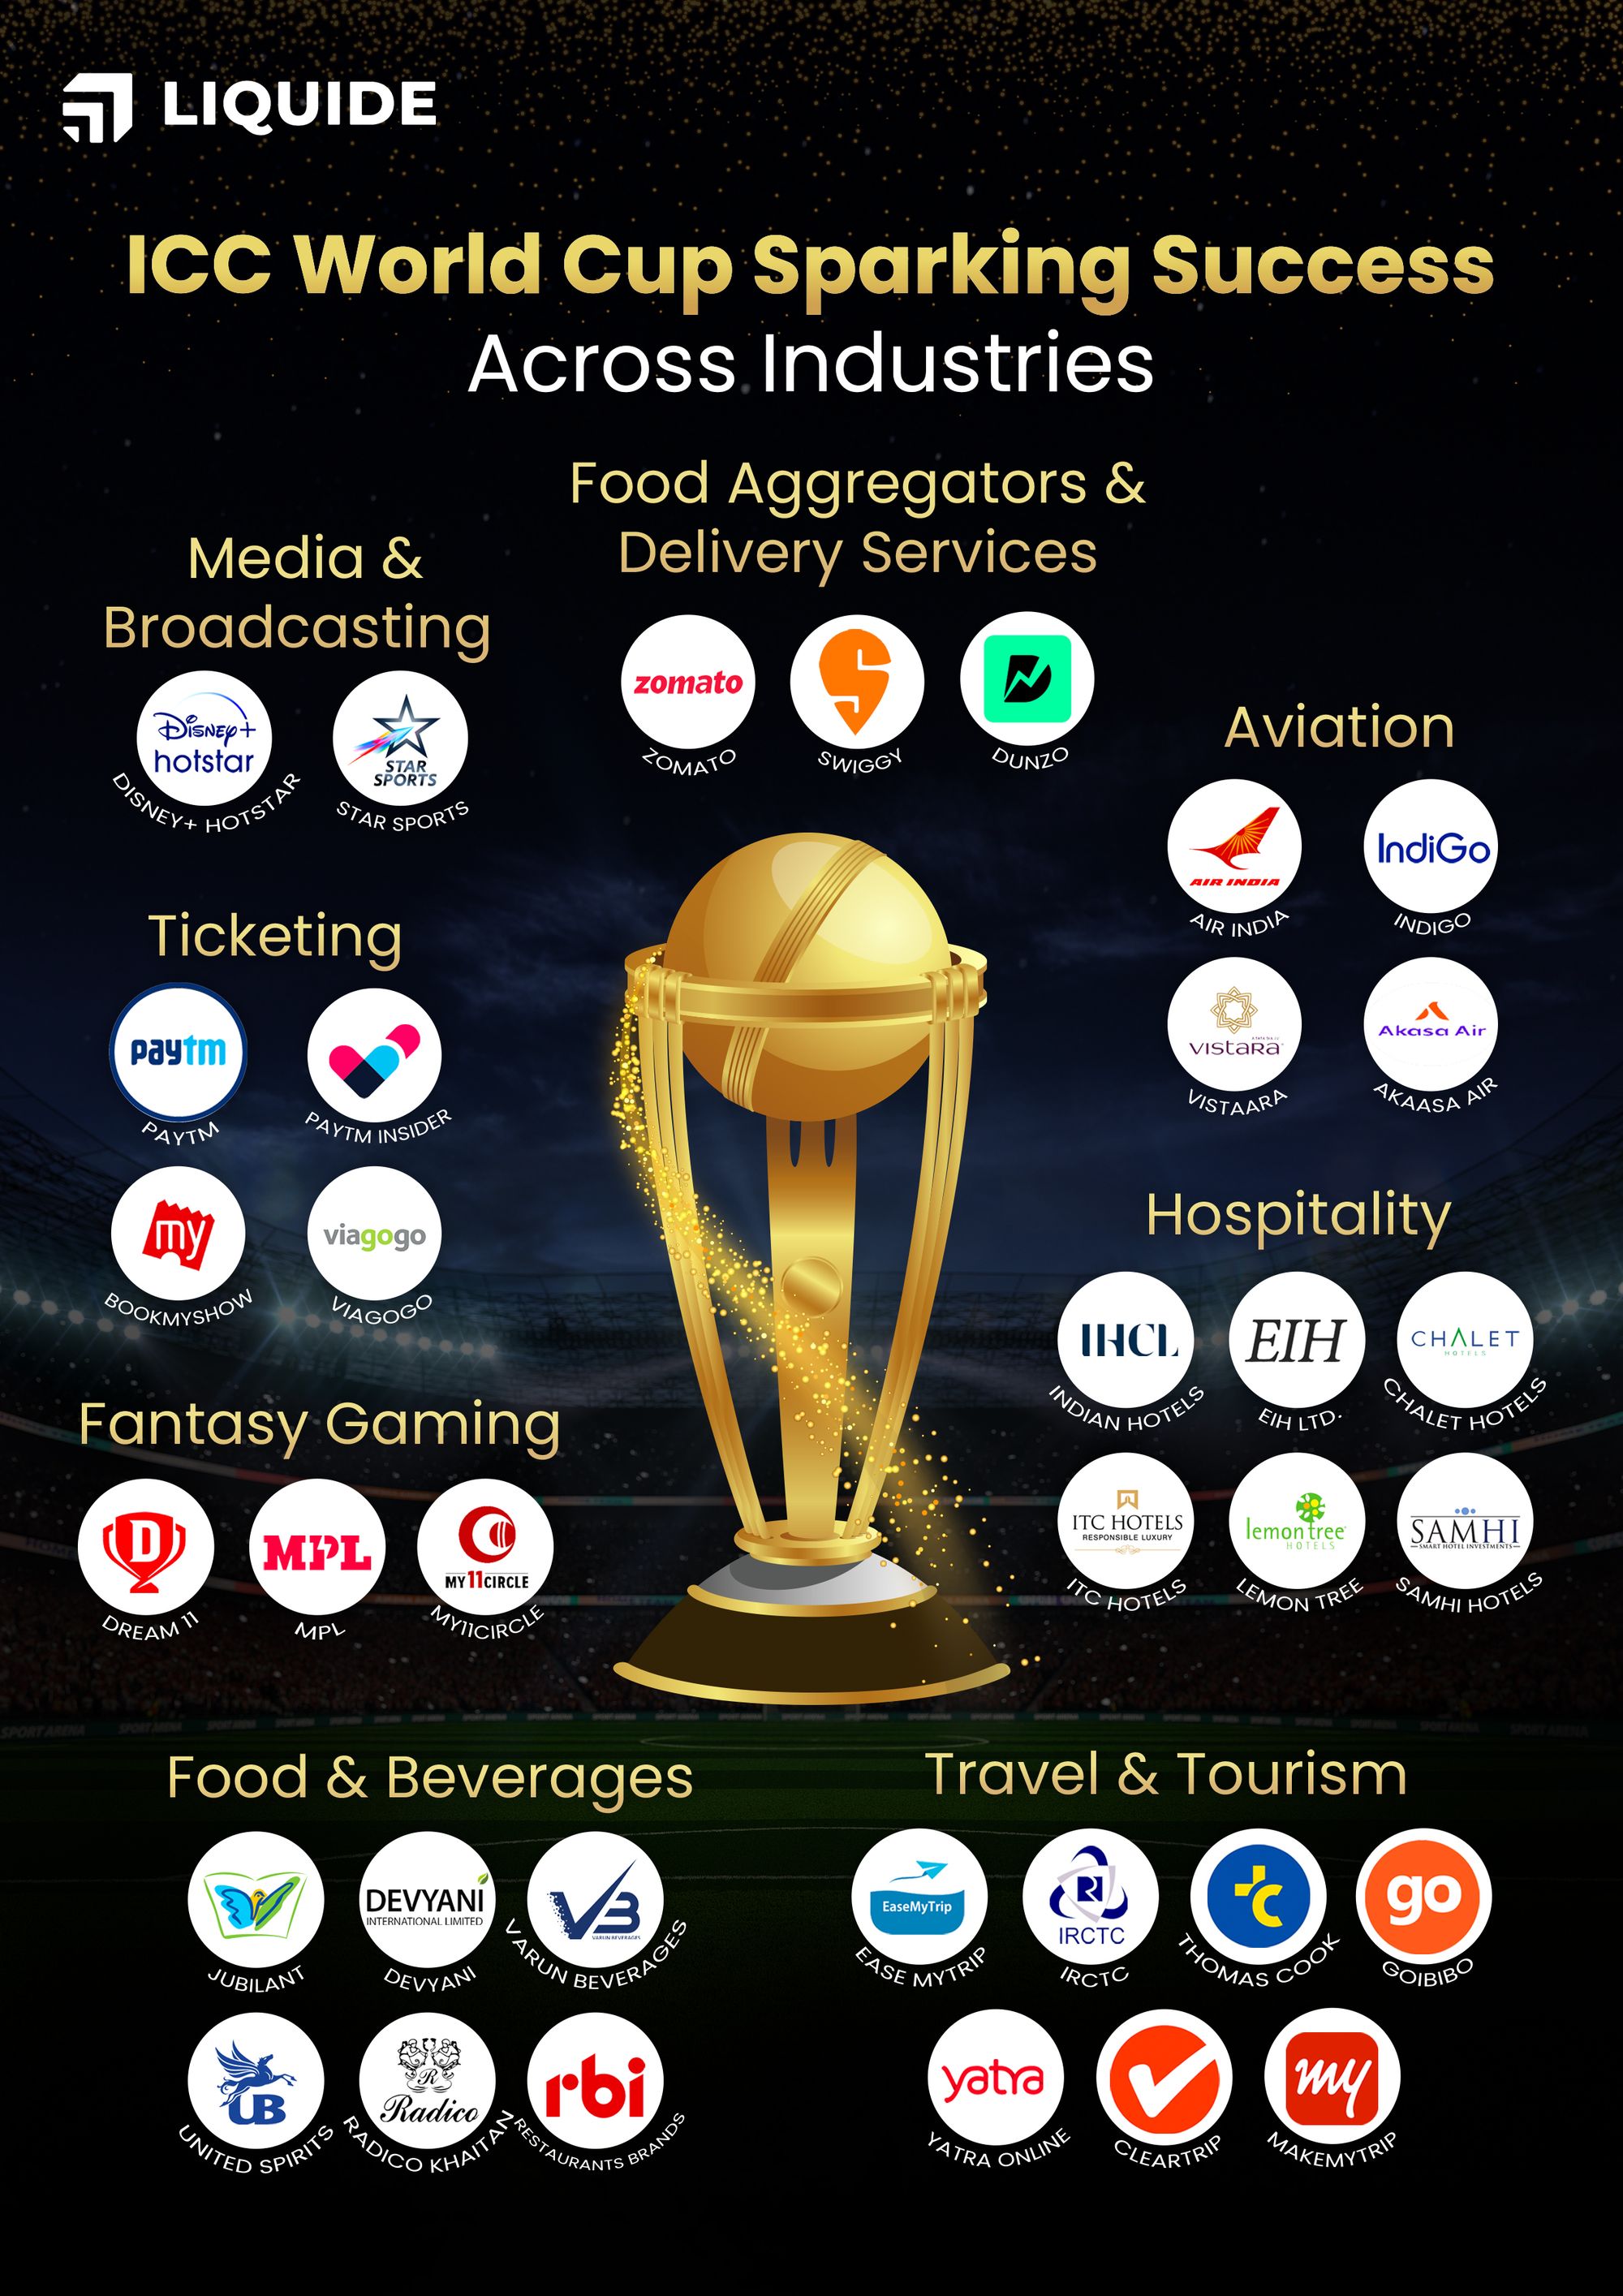 ICC World Cup, cricket world cup, ICC cup, cricket match, liquide